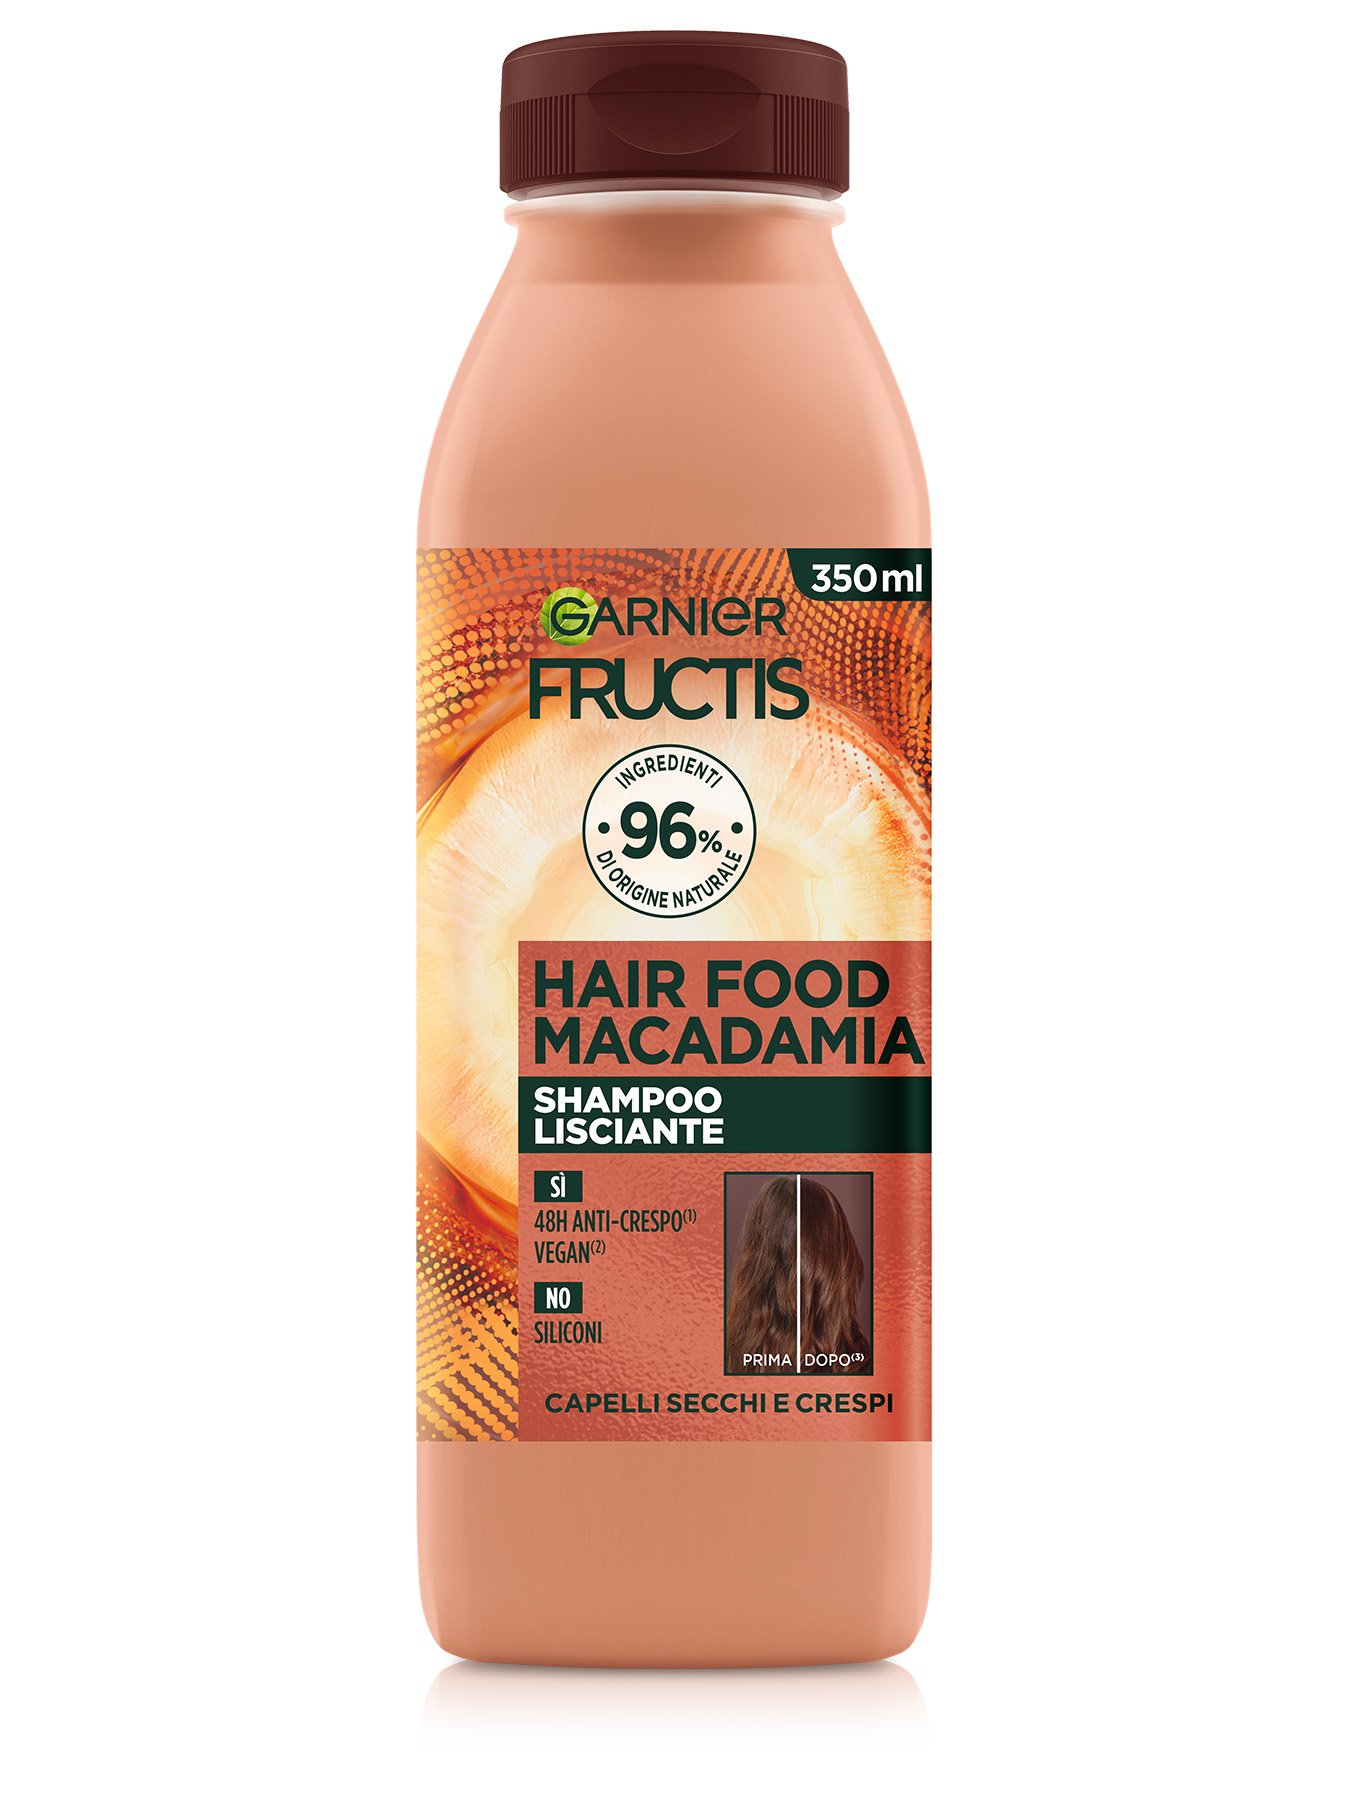 Fructis Hair Food Macadamia Shampoo